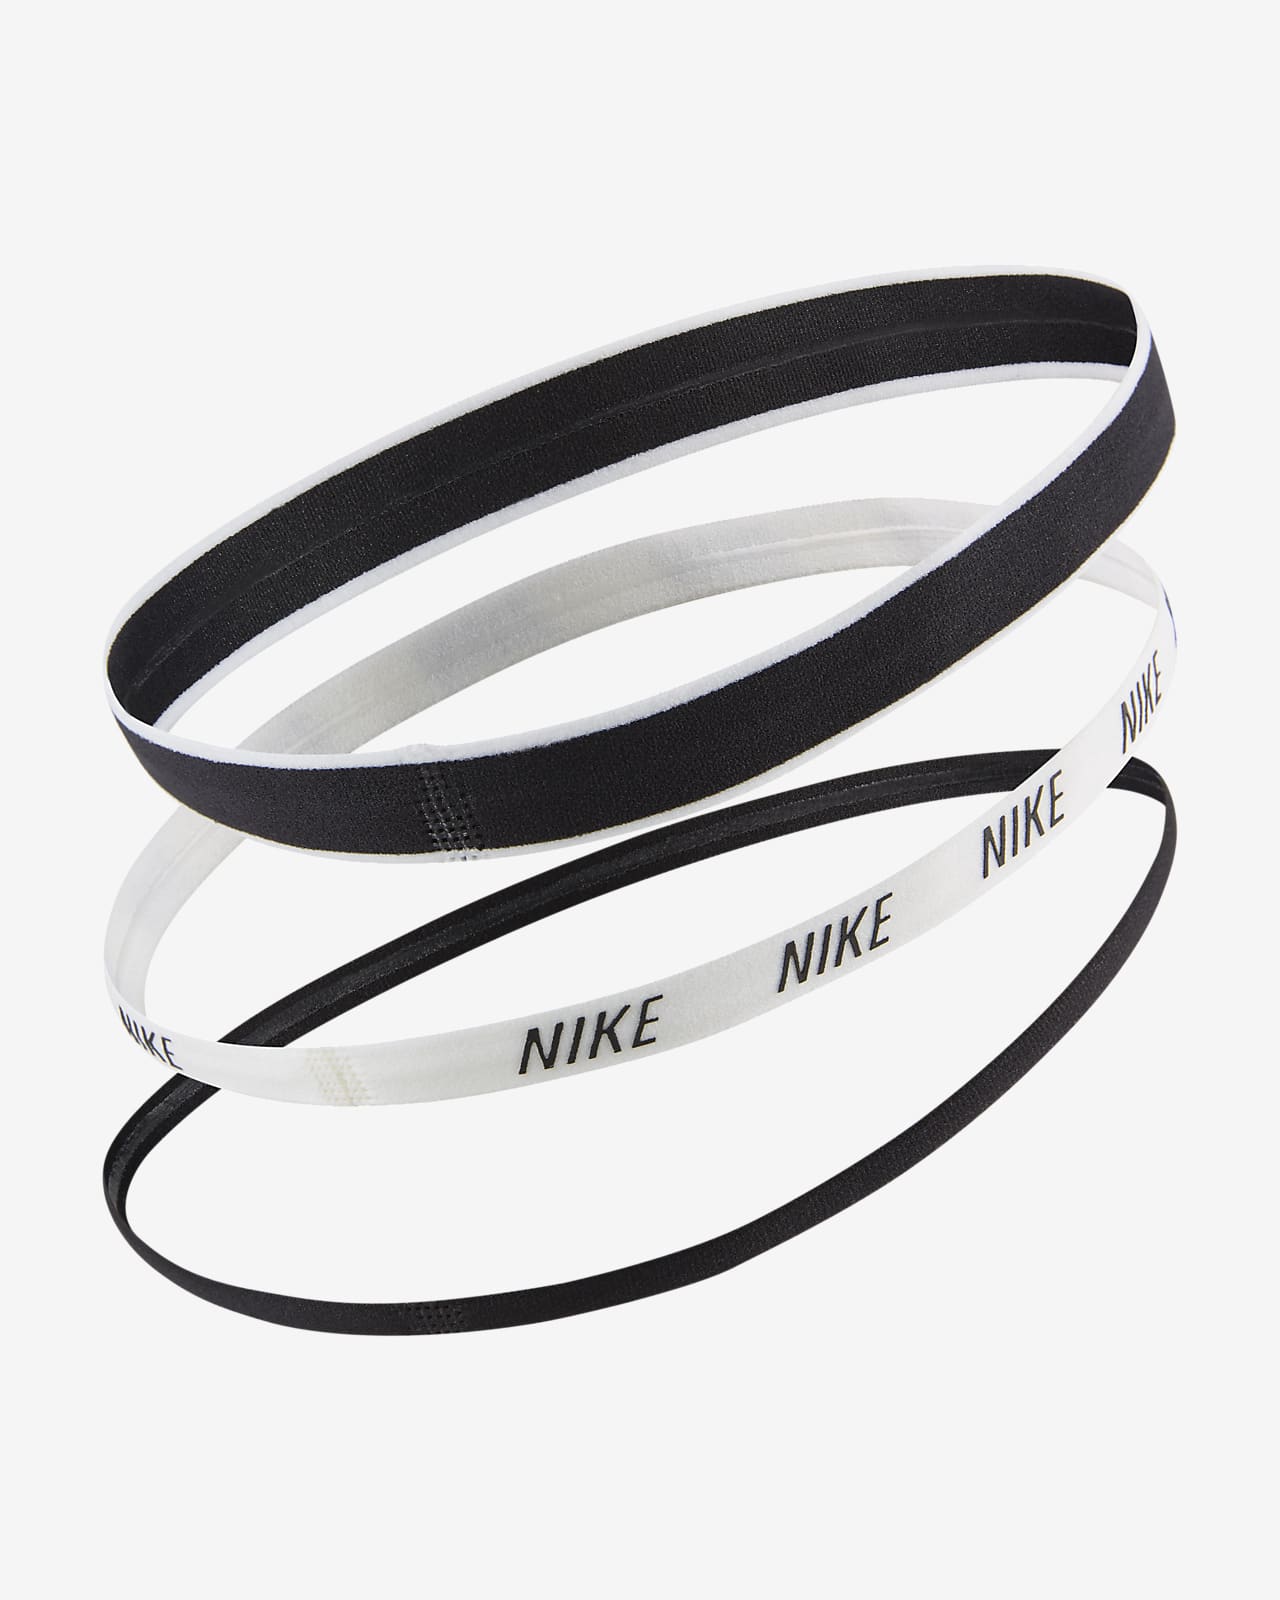 nike mixed width headbands 3 pack